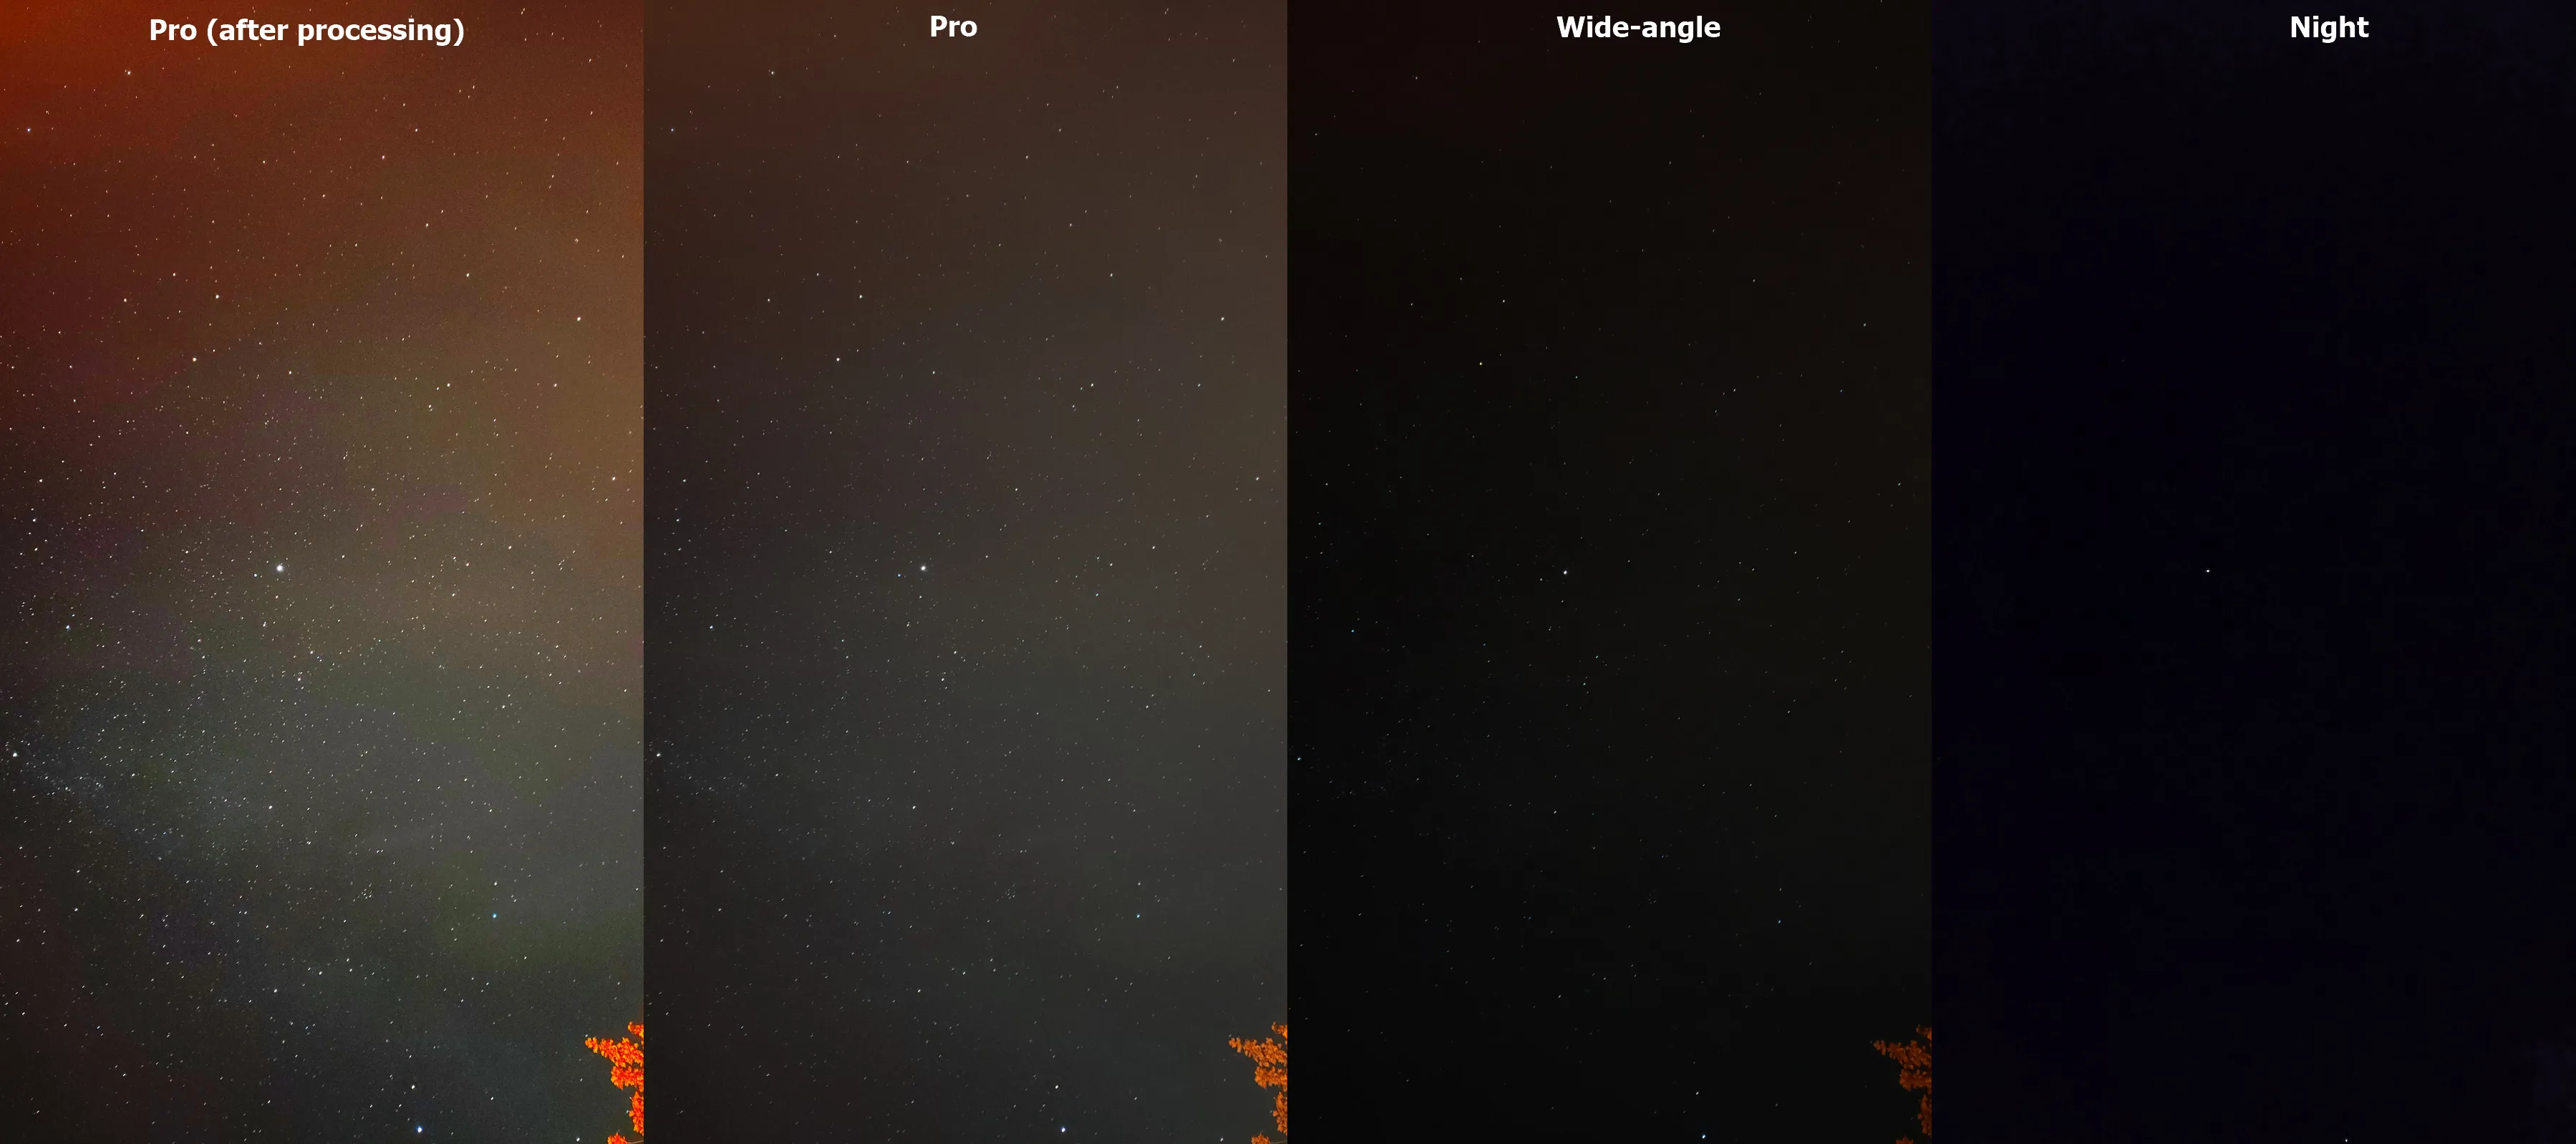 Xiaomi Mi 9 (Global version) night mode comparison